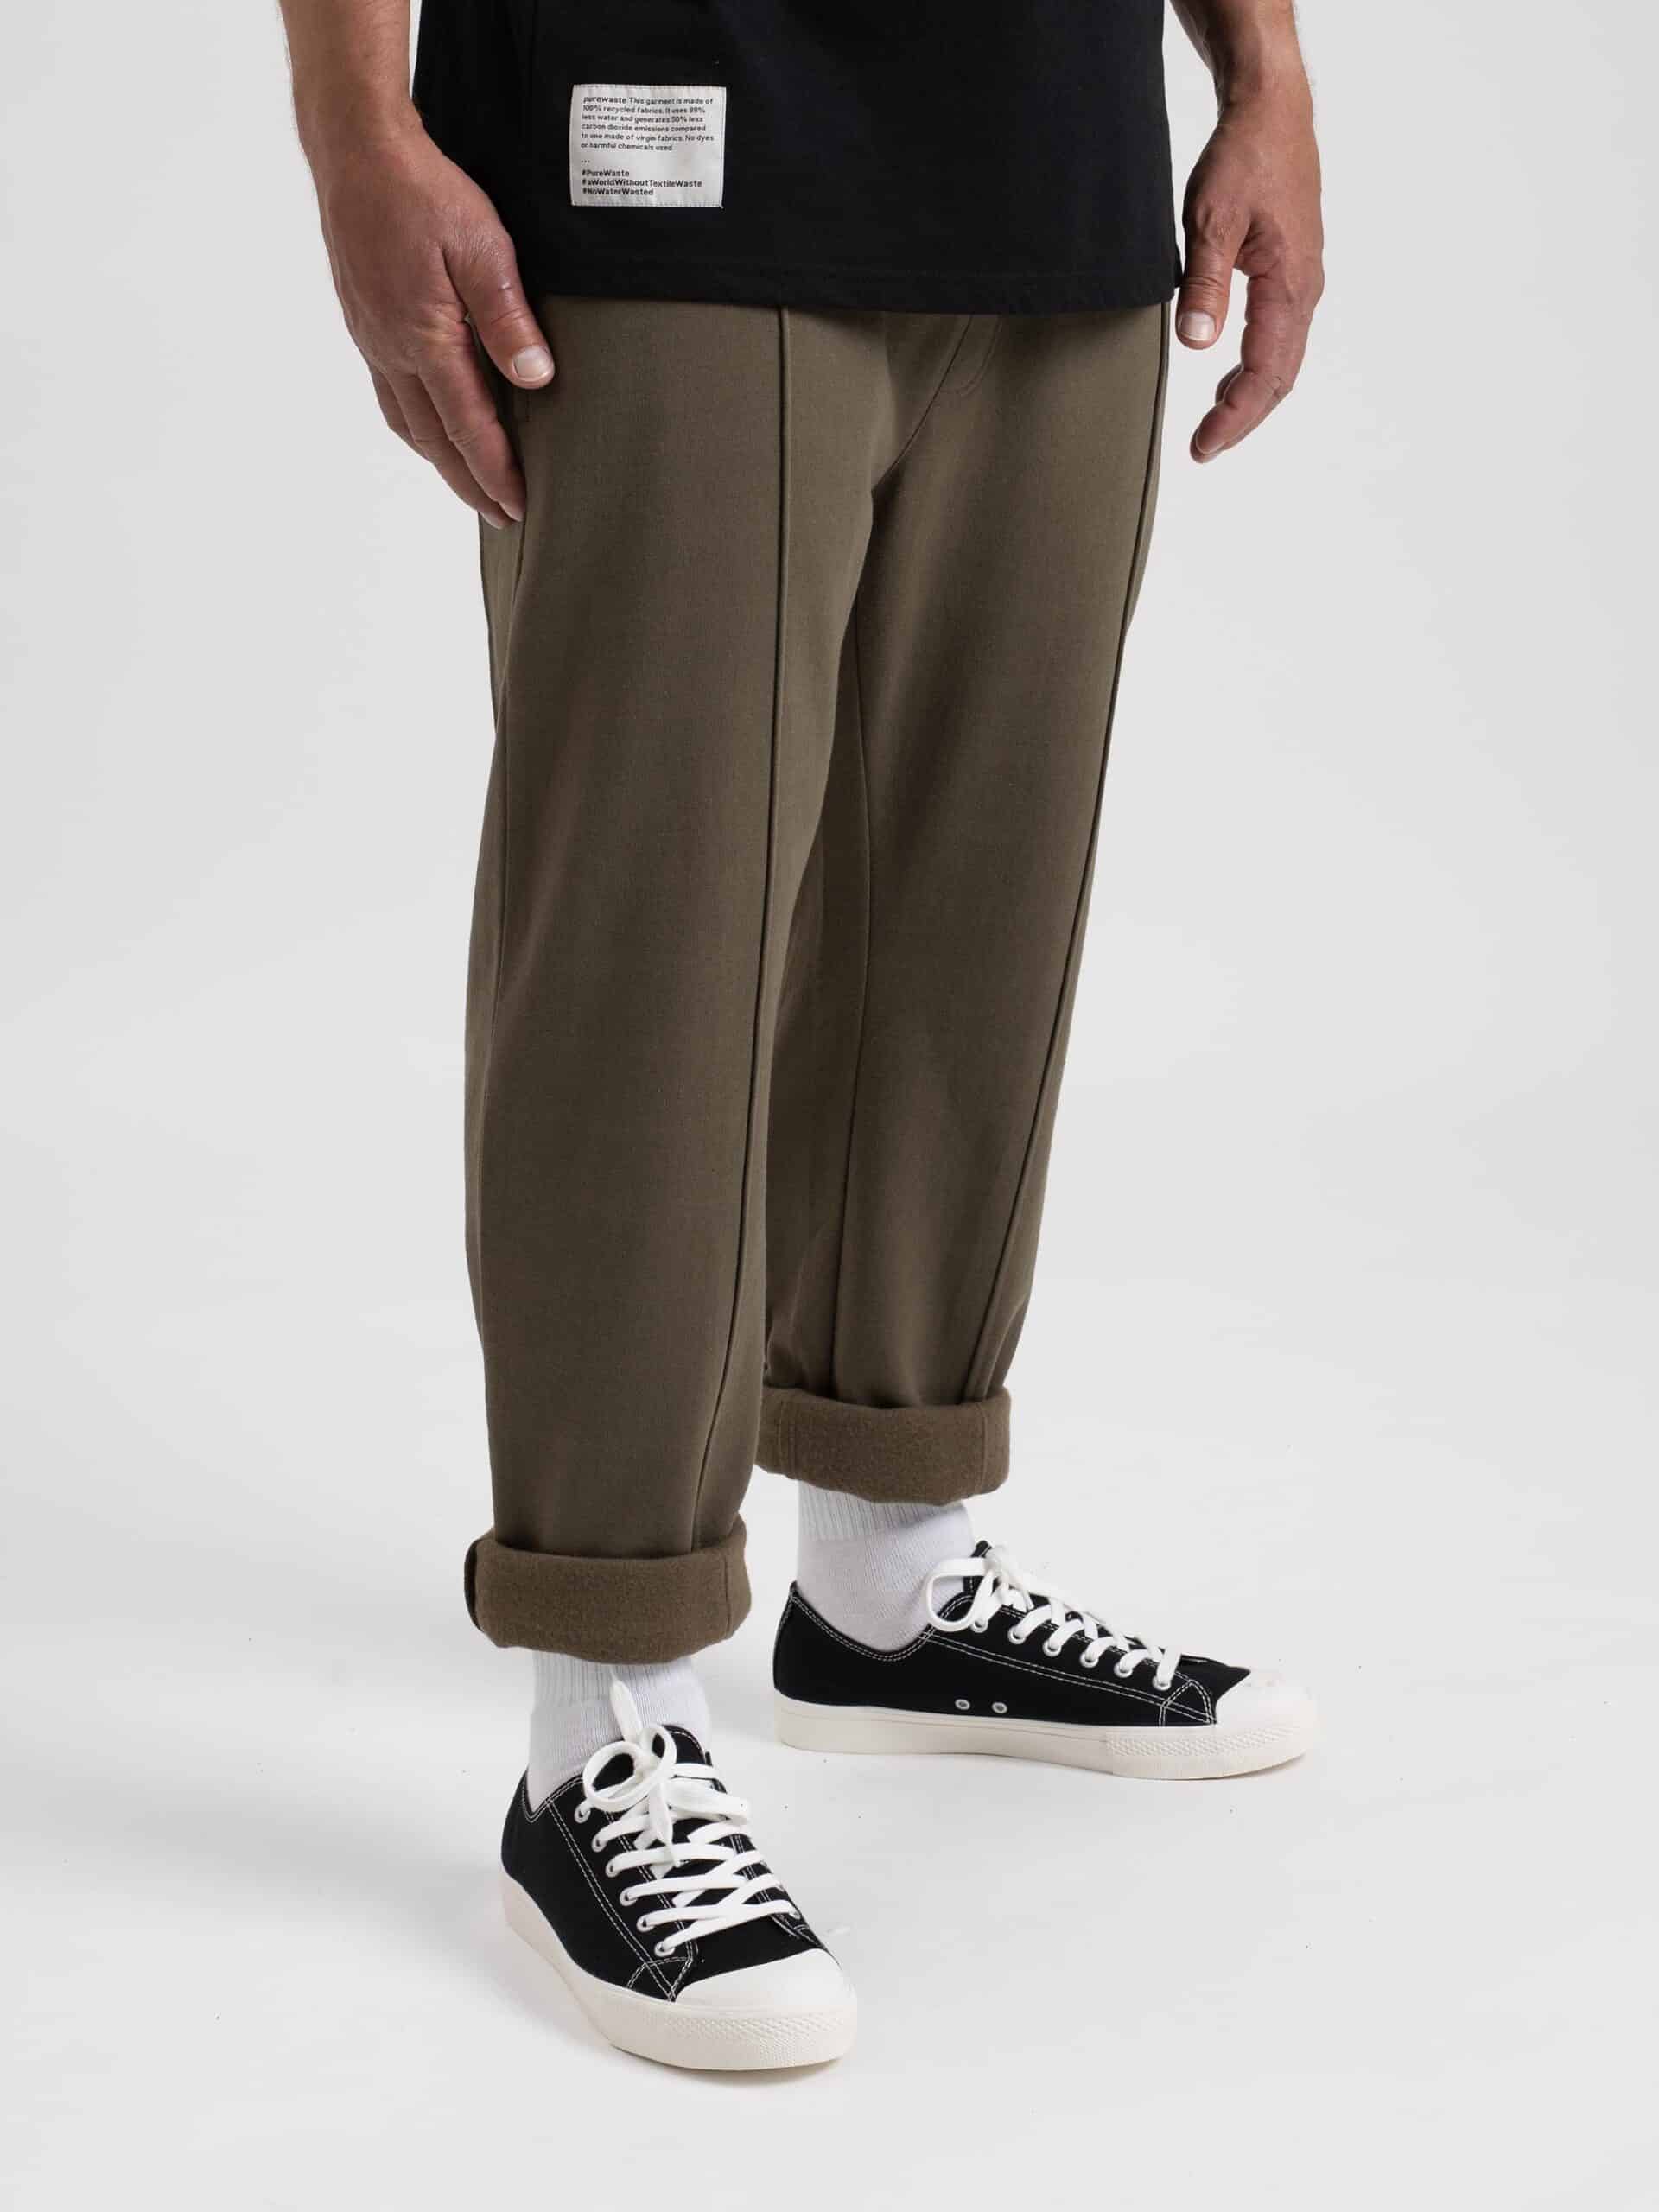 Buy Grey Pin Tuck Trouser Pants Online - W for Woman